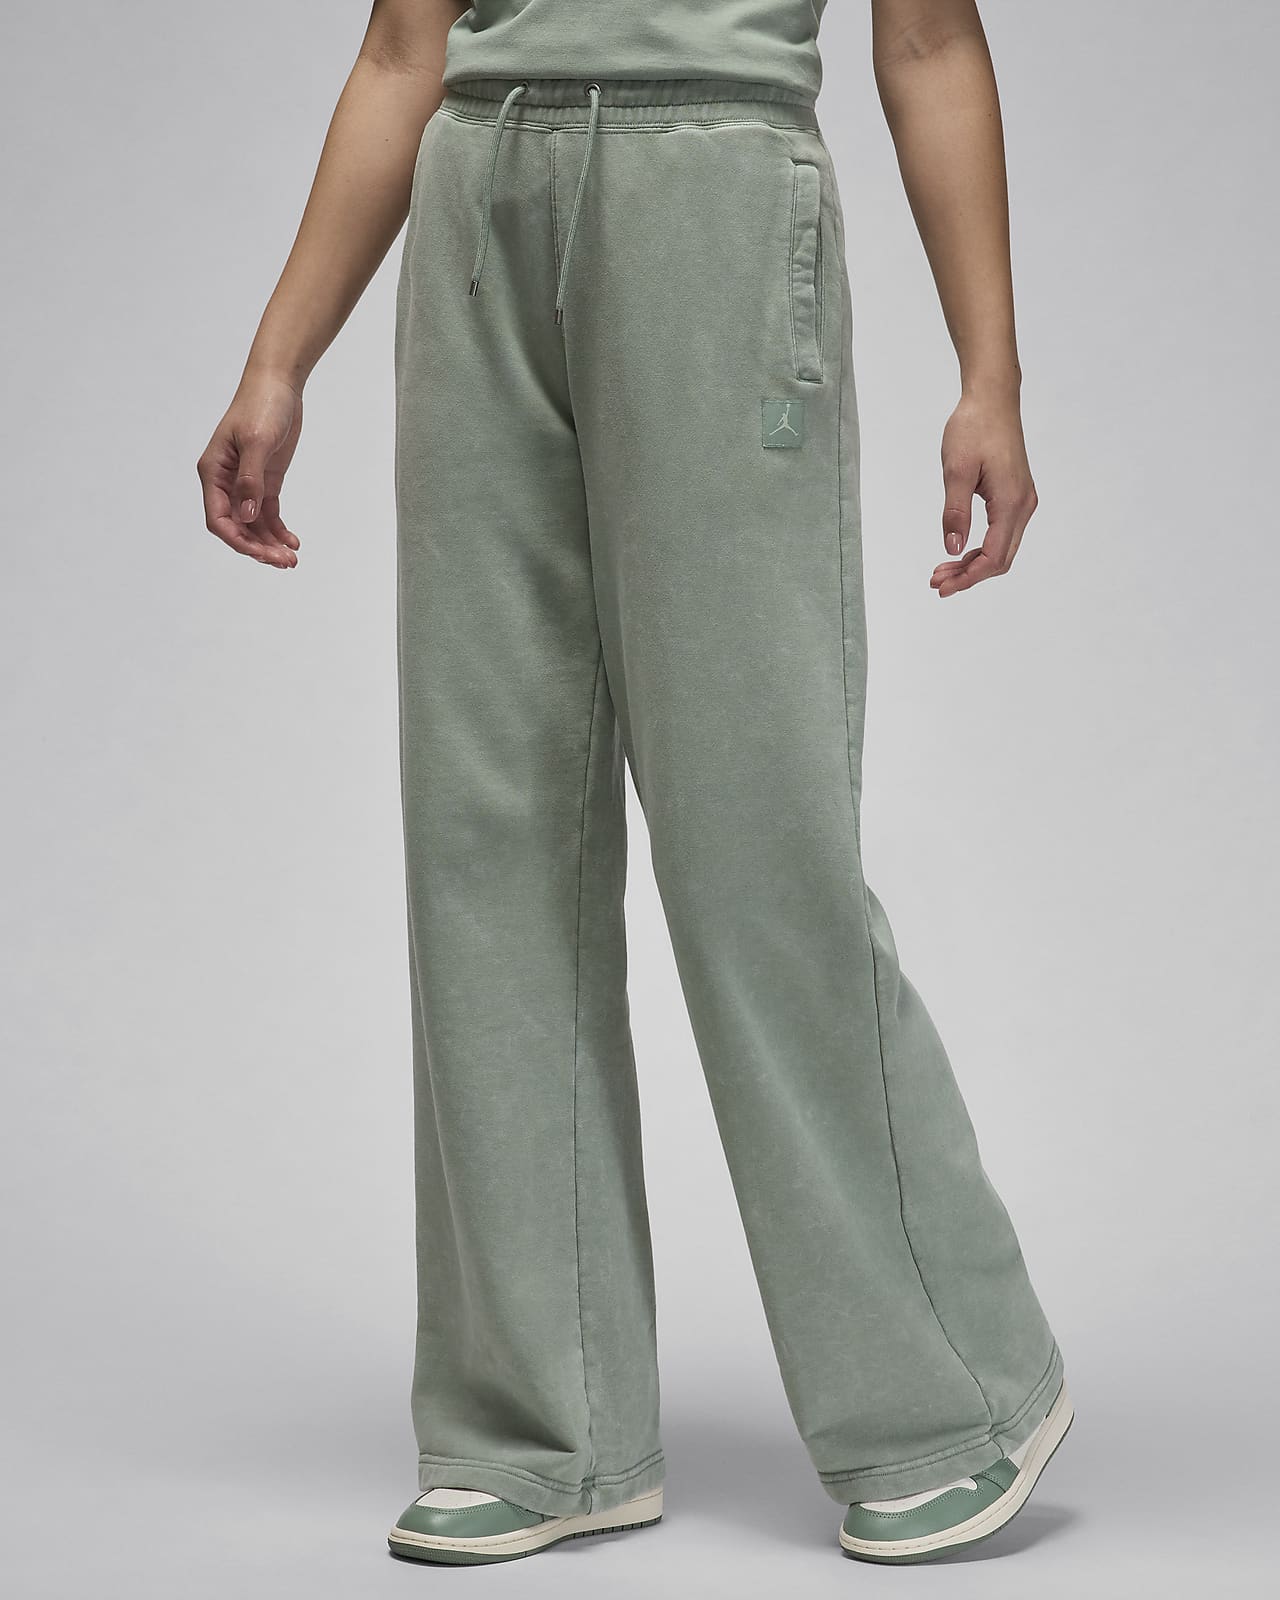 Amazon.com: KANG POWER Autumn Cotton Linen Pants Men's Chinese Stripe  Printed Casual Trousers Men's Straight Harem Pants Black XS : Clothing,  Shoes & Jewelry